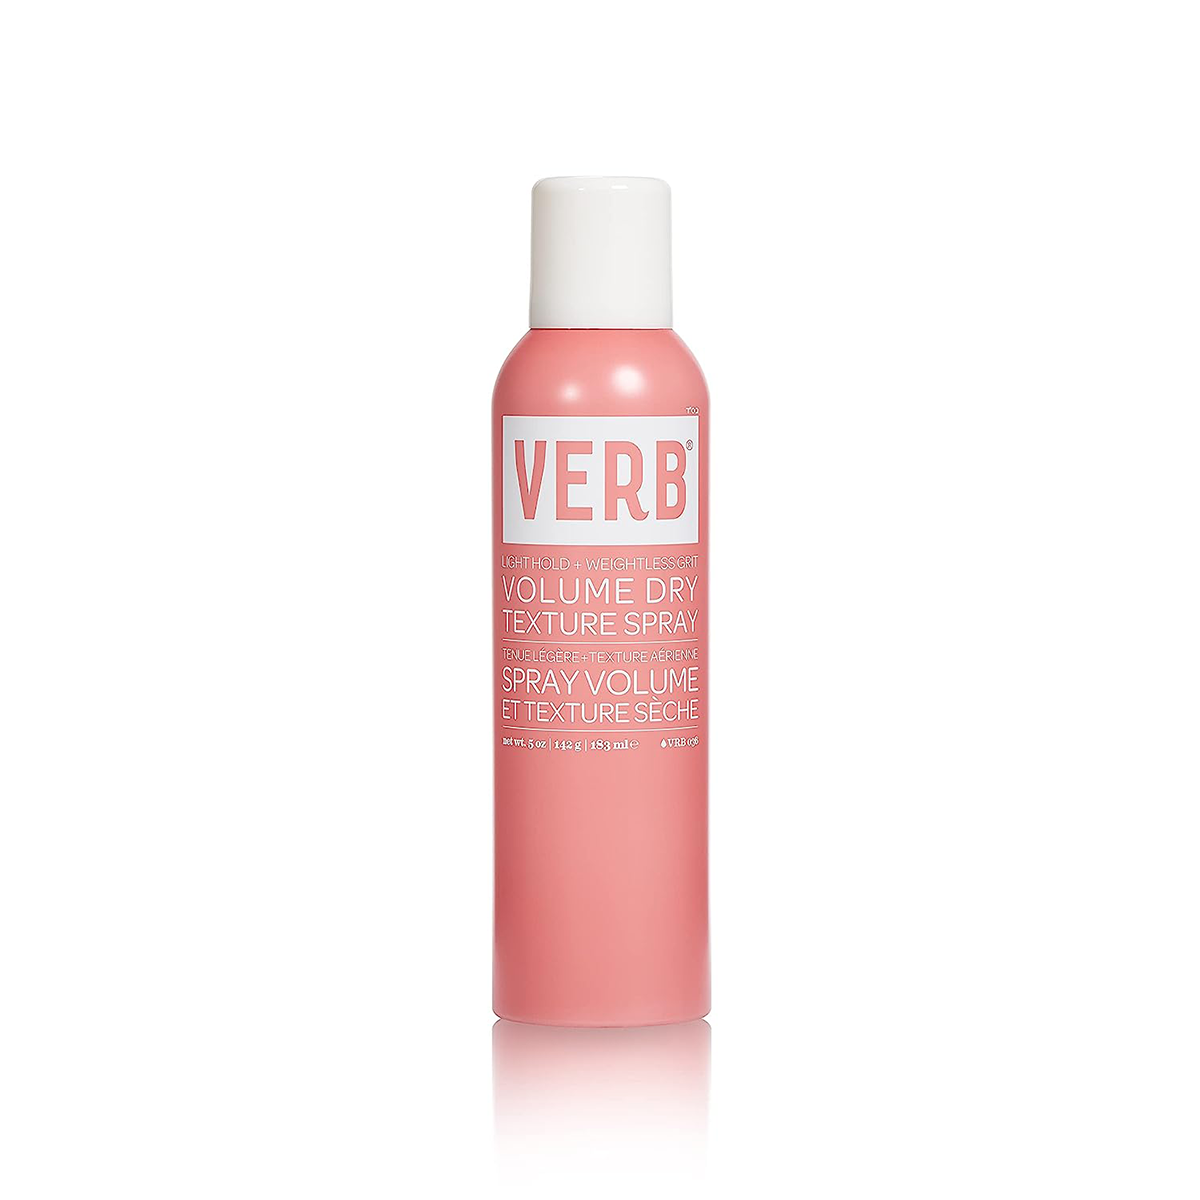 VERB Volume Dry Texture Spray